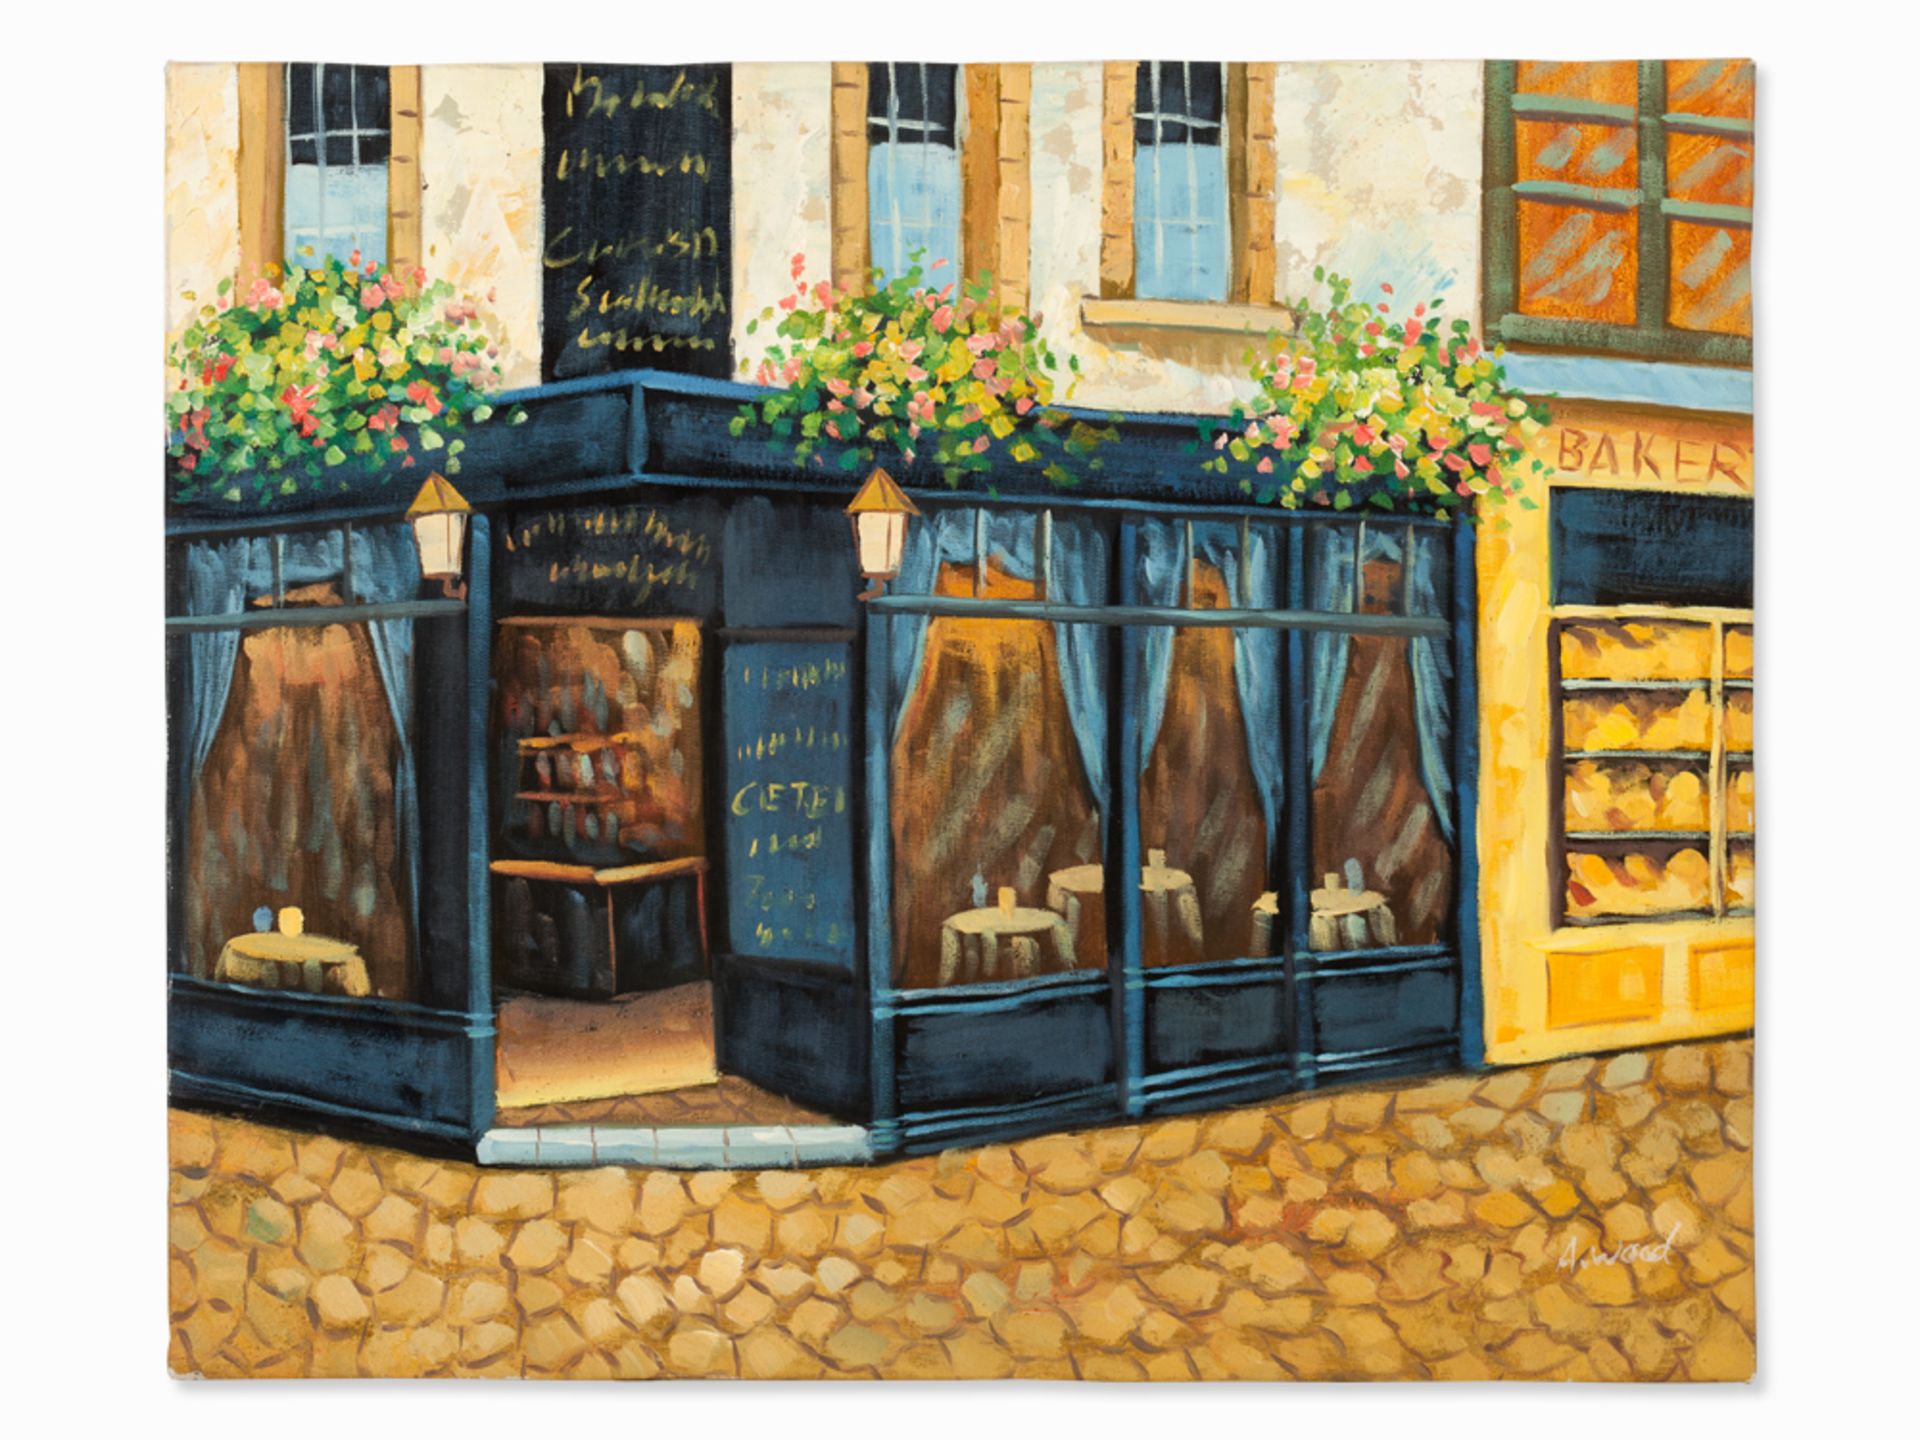 A. Wood, Oil Painting, Sidewalk Cafe, England, c. 2000